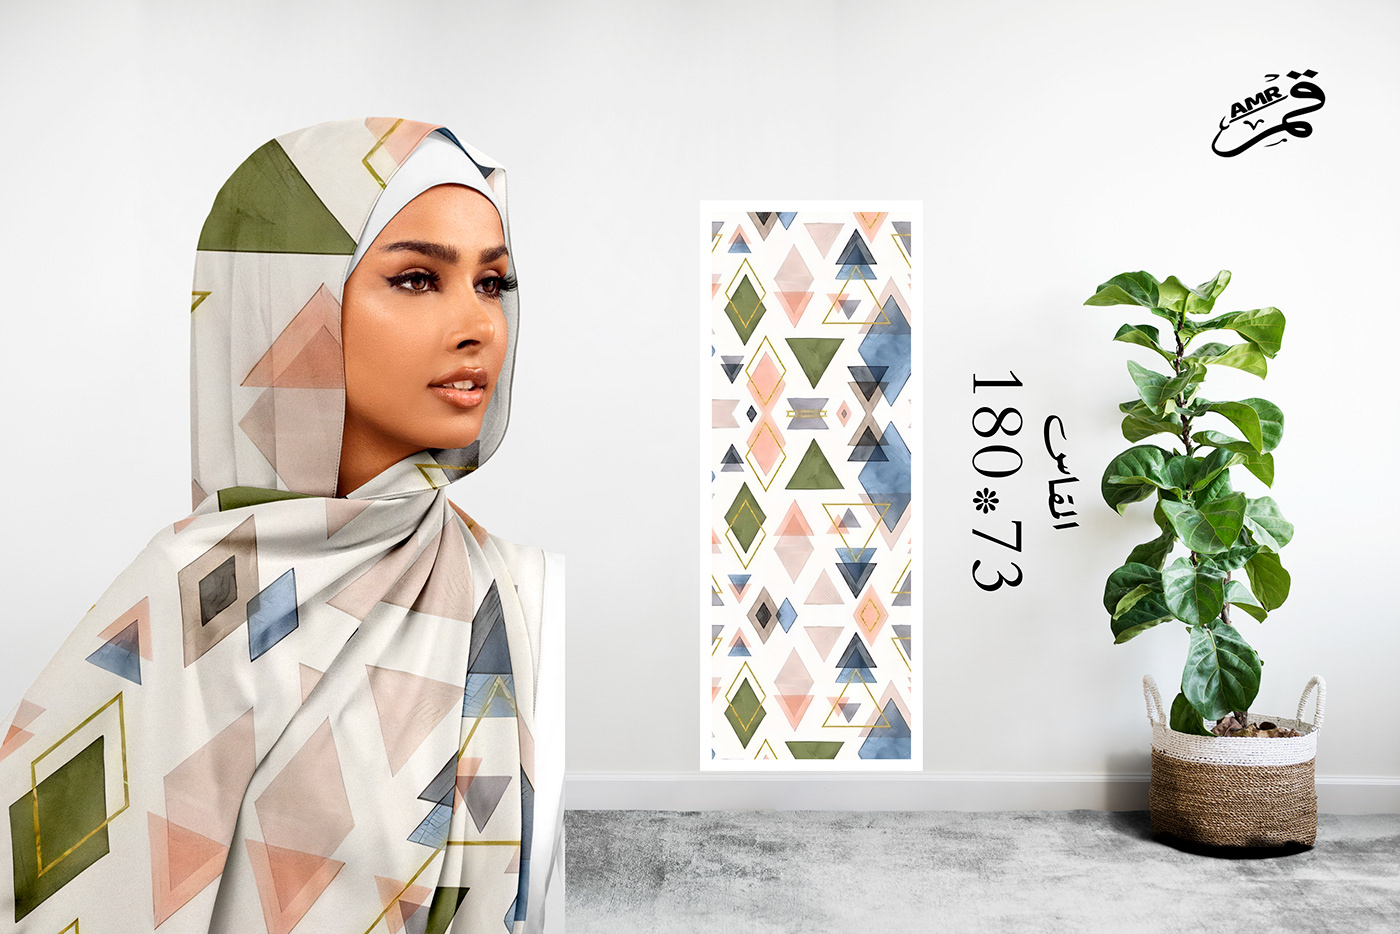 beauty Digital Art  Fashion  hijab human face muslim ramadan scarf scarf design woman